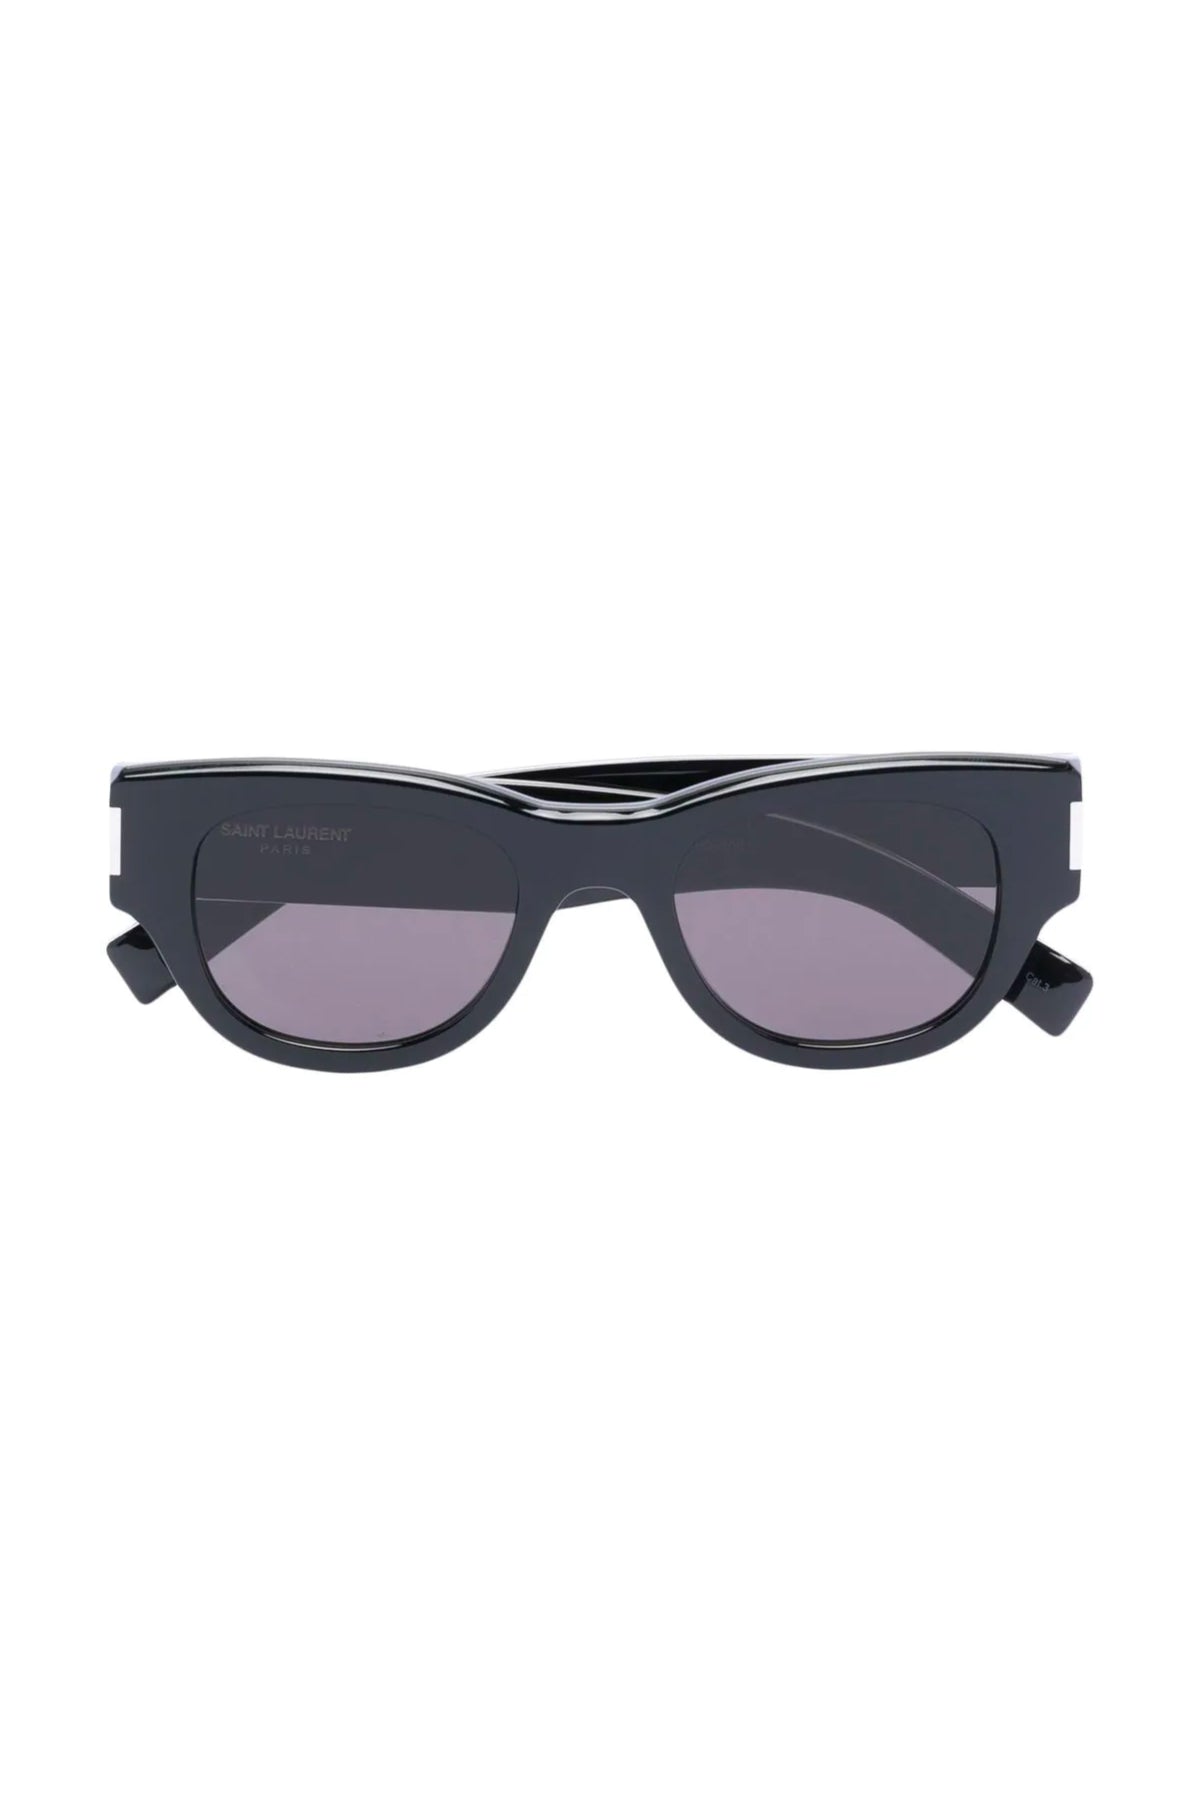 Saint Laurent Oversized Cat Eye Sunglasses - Black